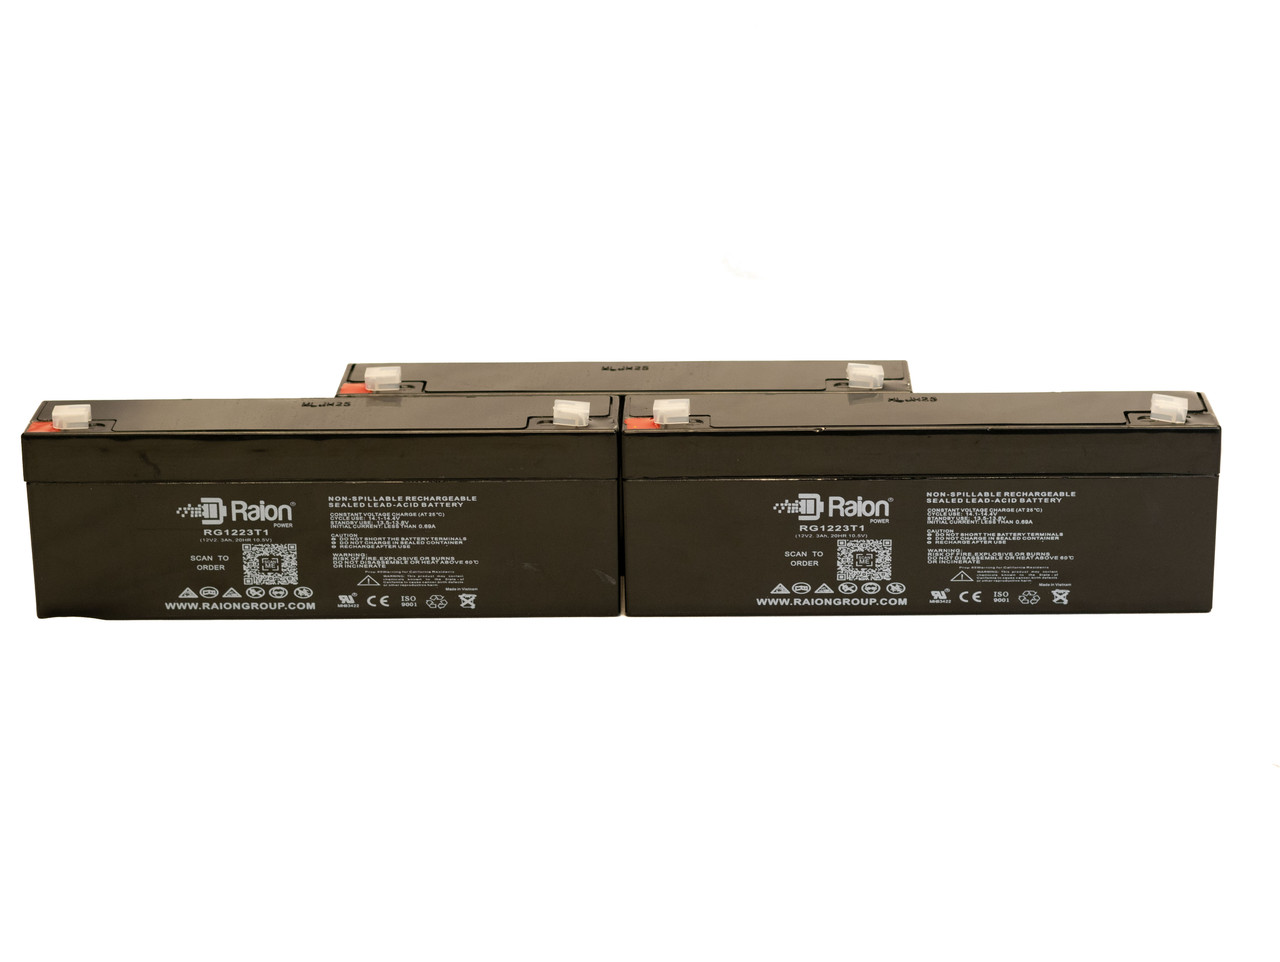 Raion Power 12V 2.3Ah RG1223T1 Replacement Medical Battery for Fukuda Denshi 501AX ECG Atrix Cardisung - 3 Pack